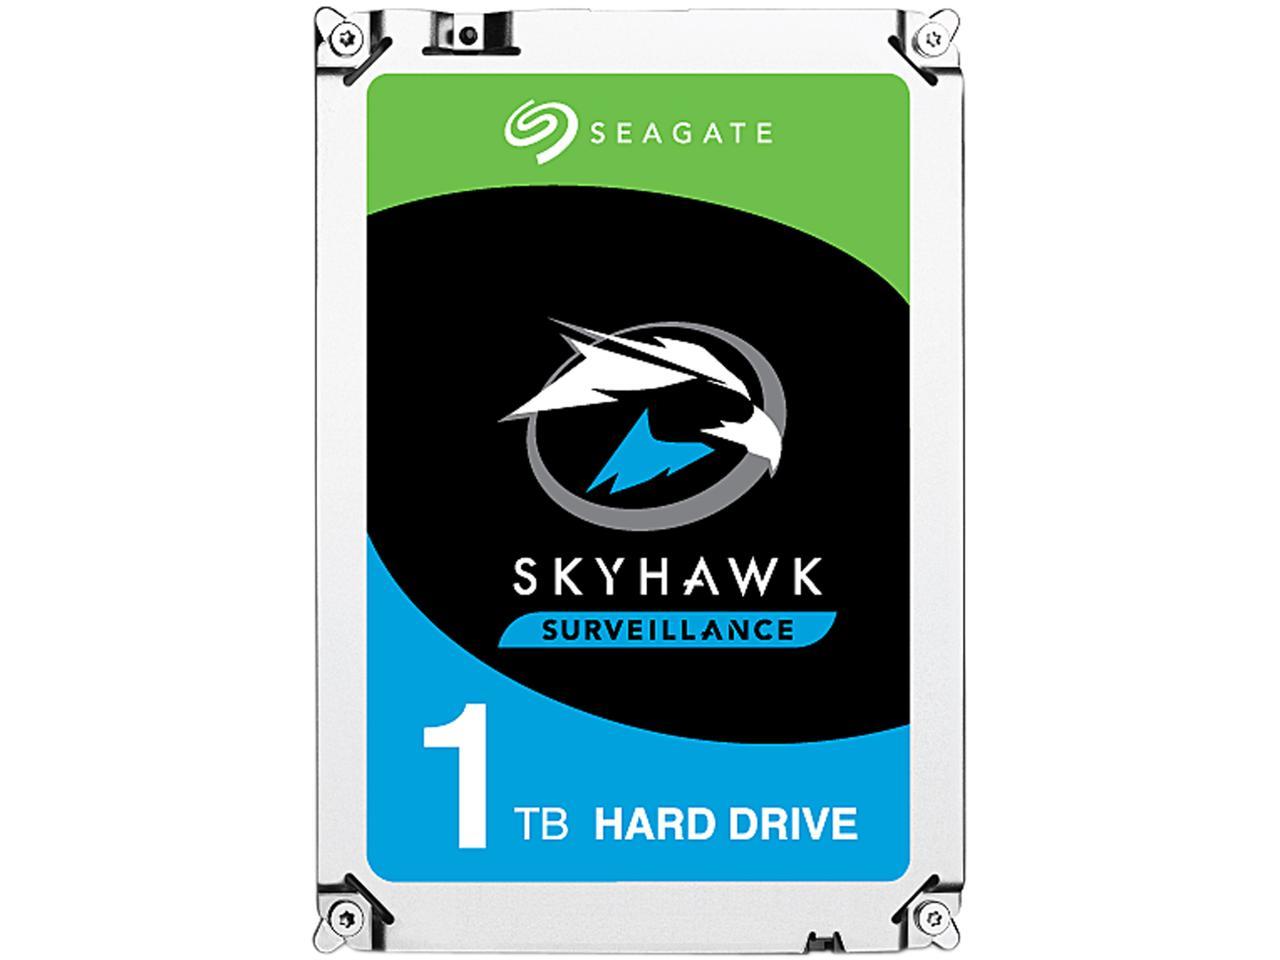 Seagate Skyhawk 1Tb Surveillance Hard Drive 64Mb Cache Sata 6.0Gb/S 3.5" Internal Hard Drive St1000Vx005